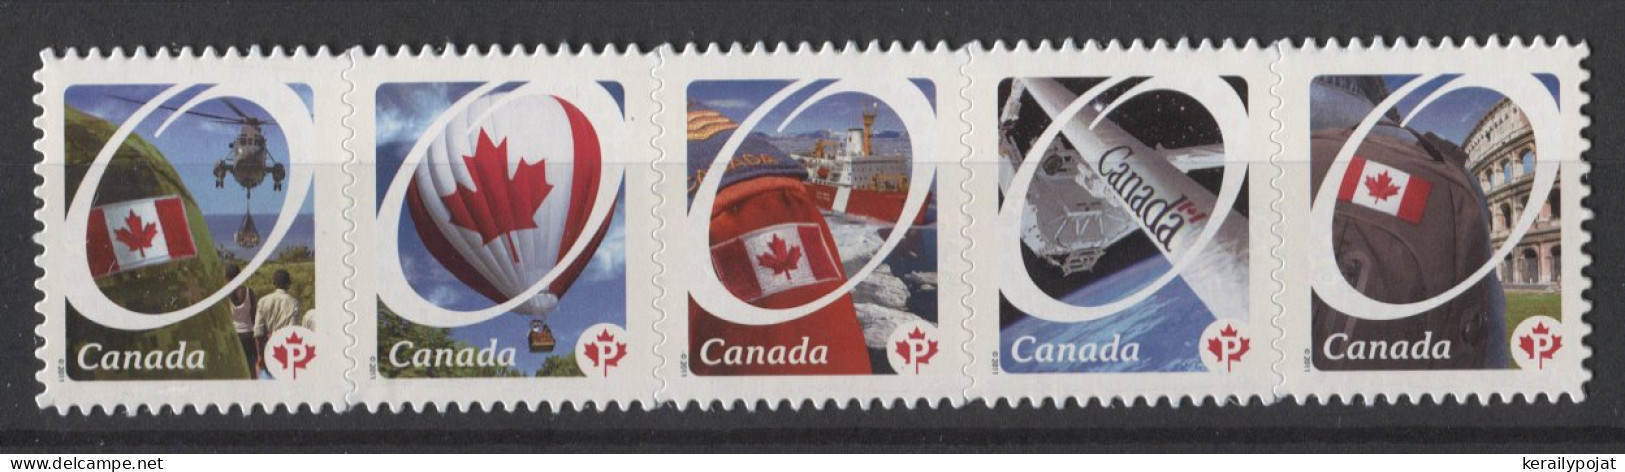 Canada - 2011 National Flag Self-adhesive MNH__(TH-24849) - Ungebraucht